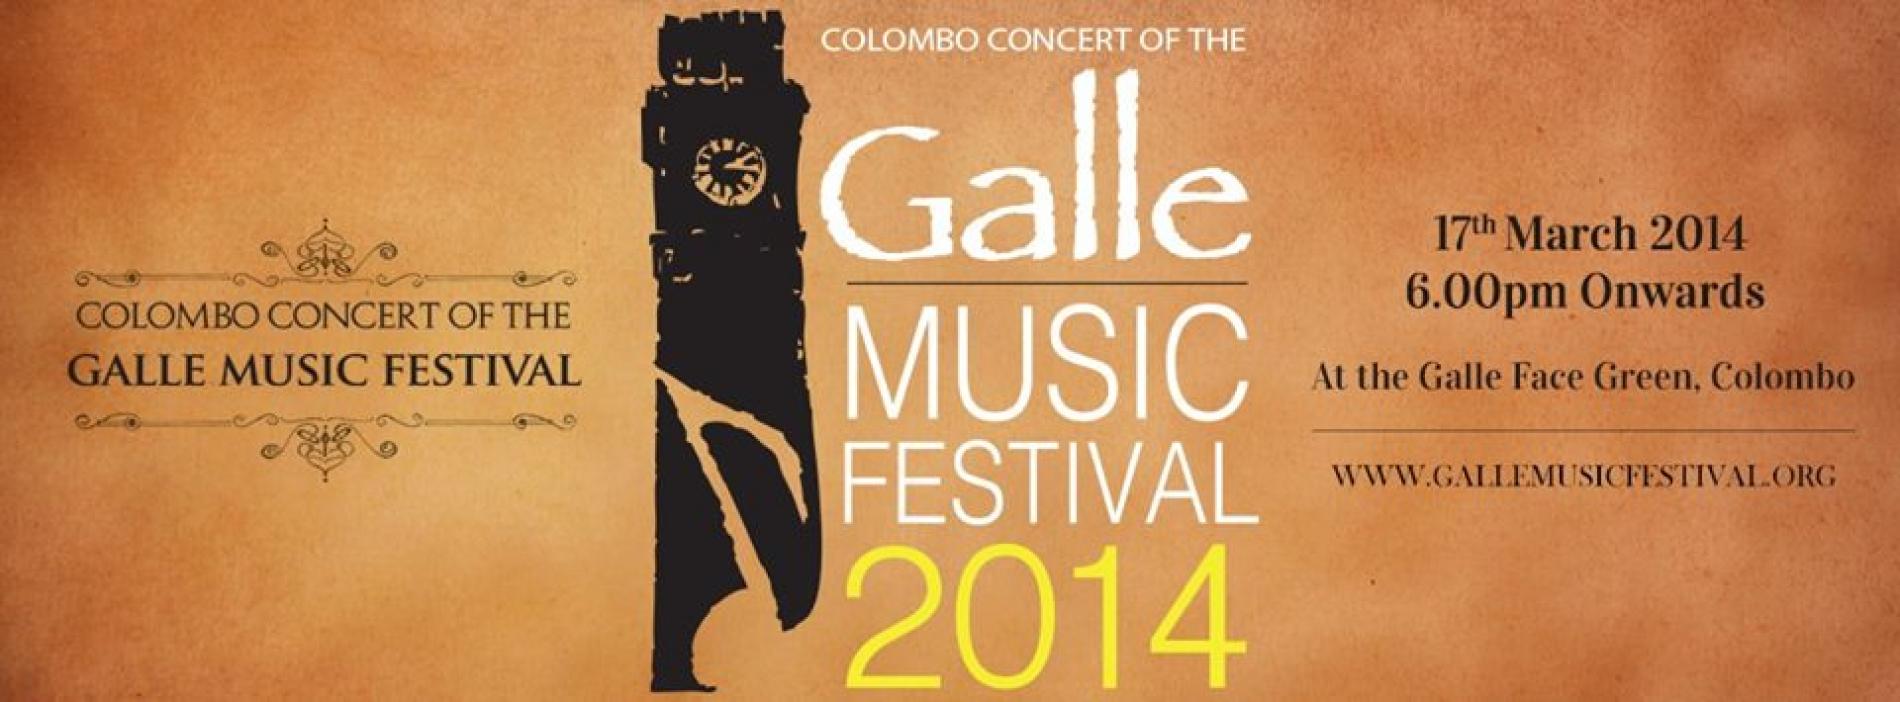 Galle Music Festival 2014: Colombo